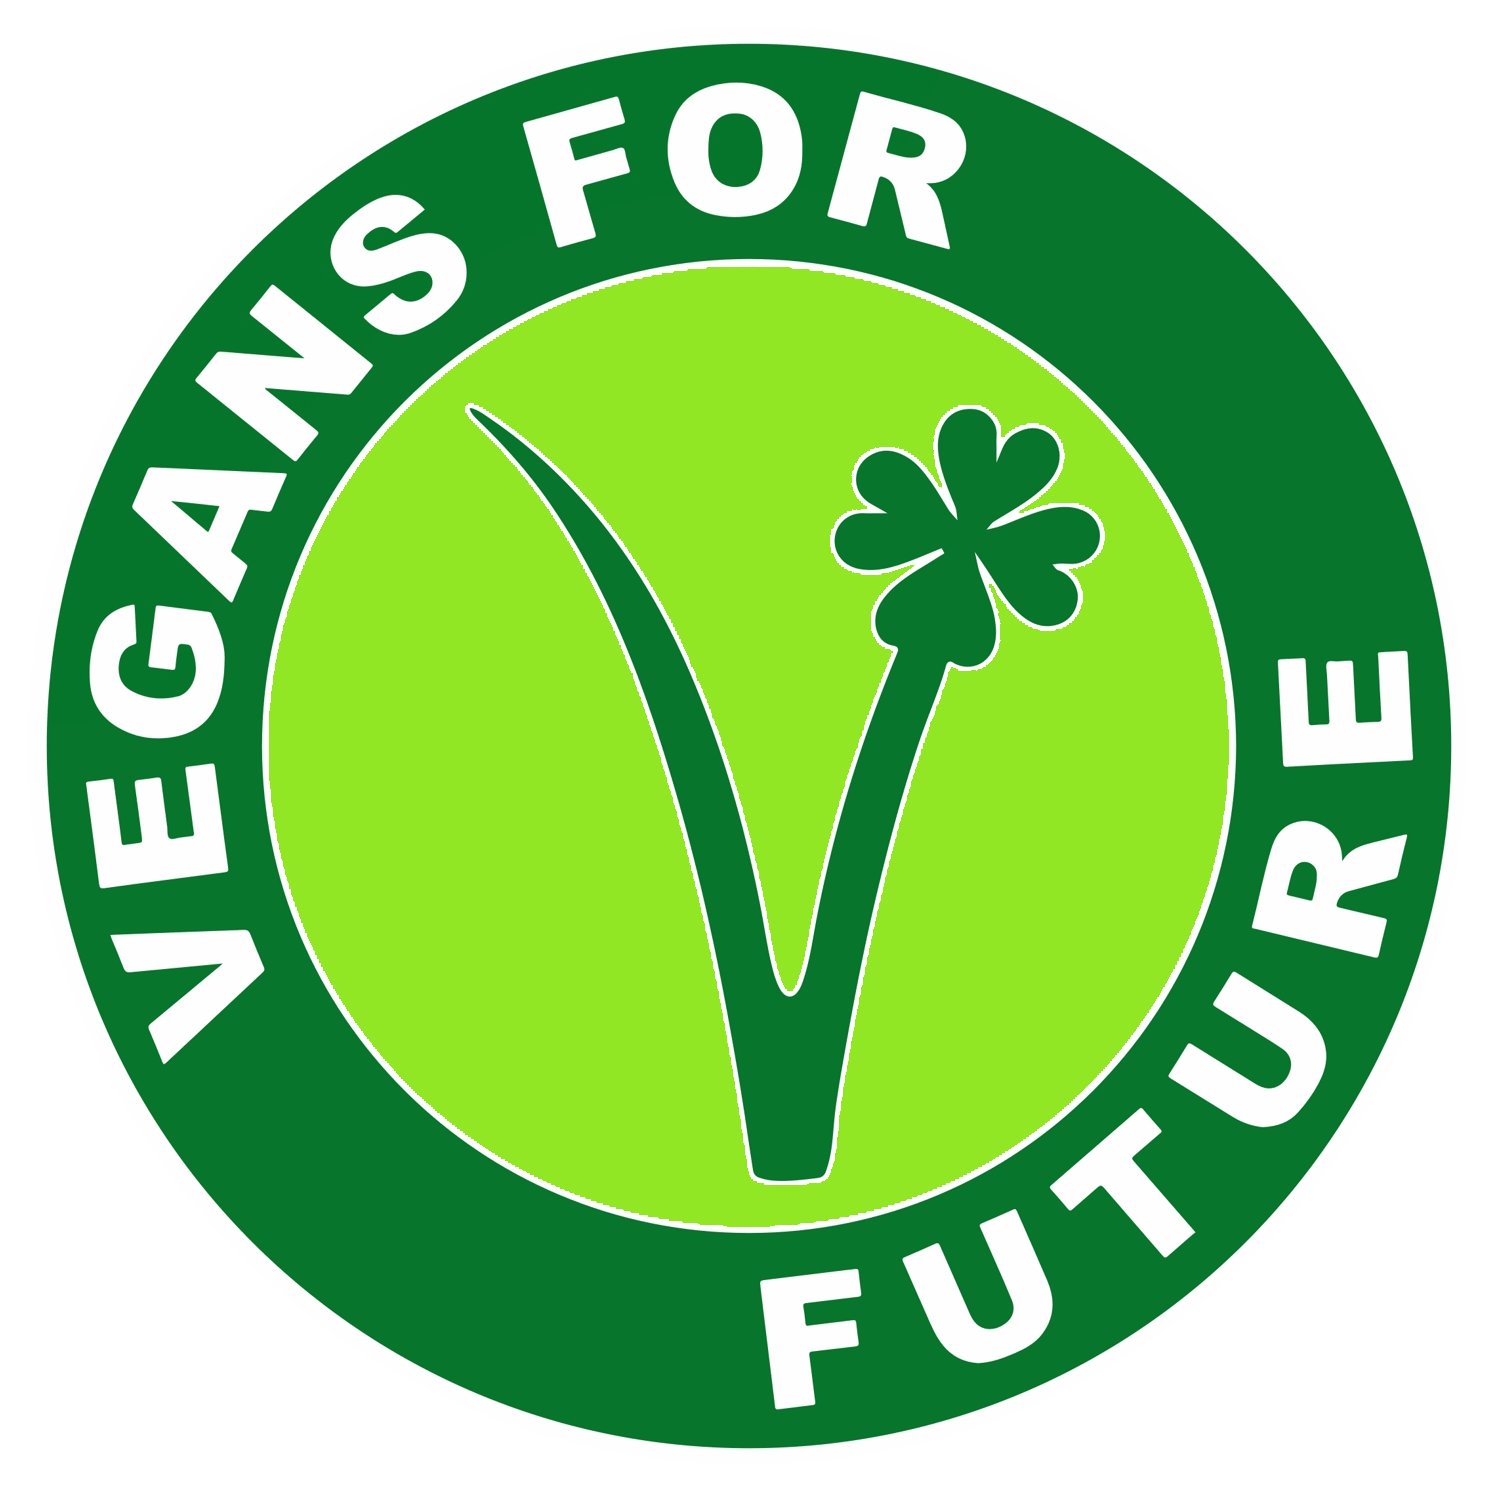 Vegans For Future